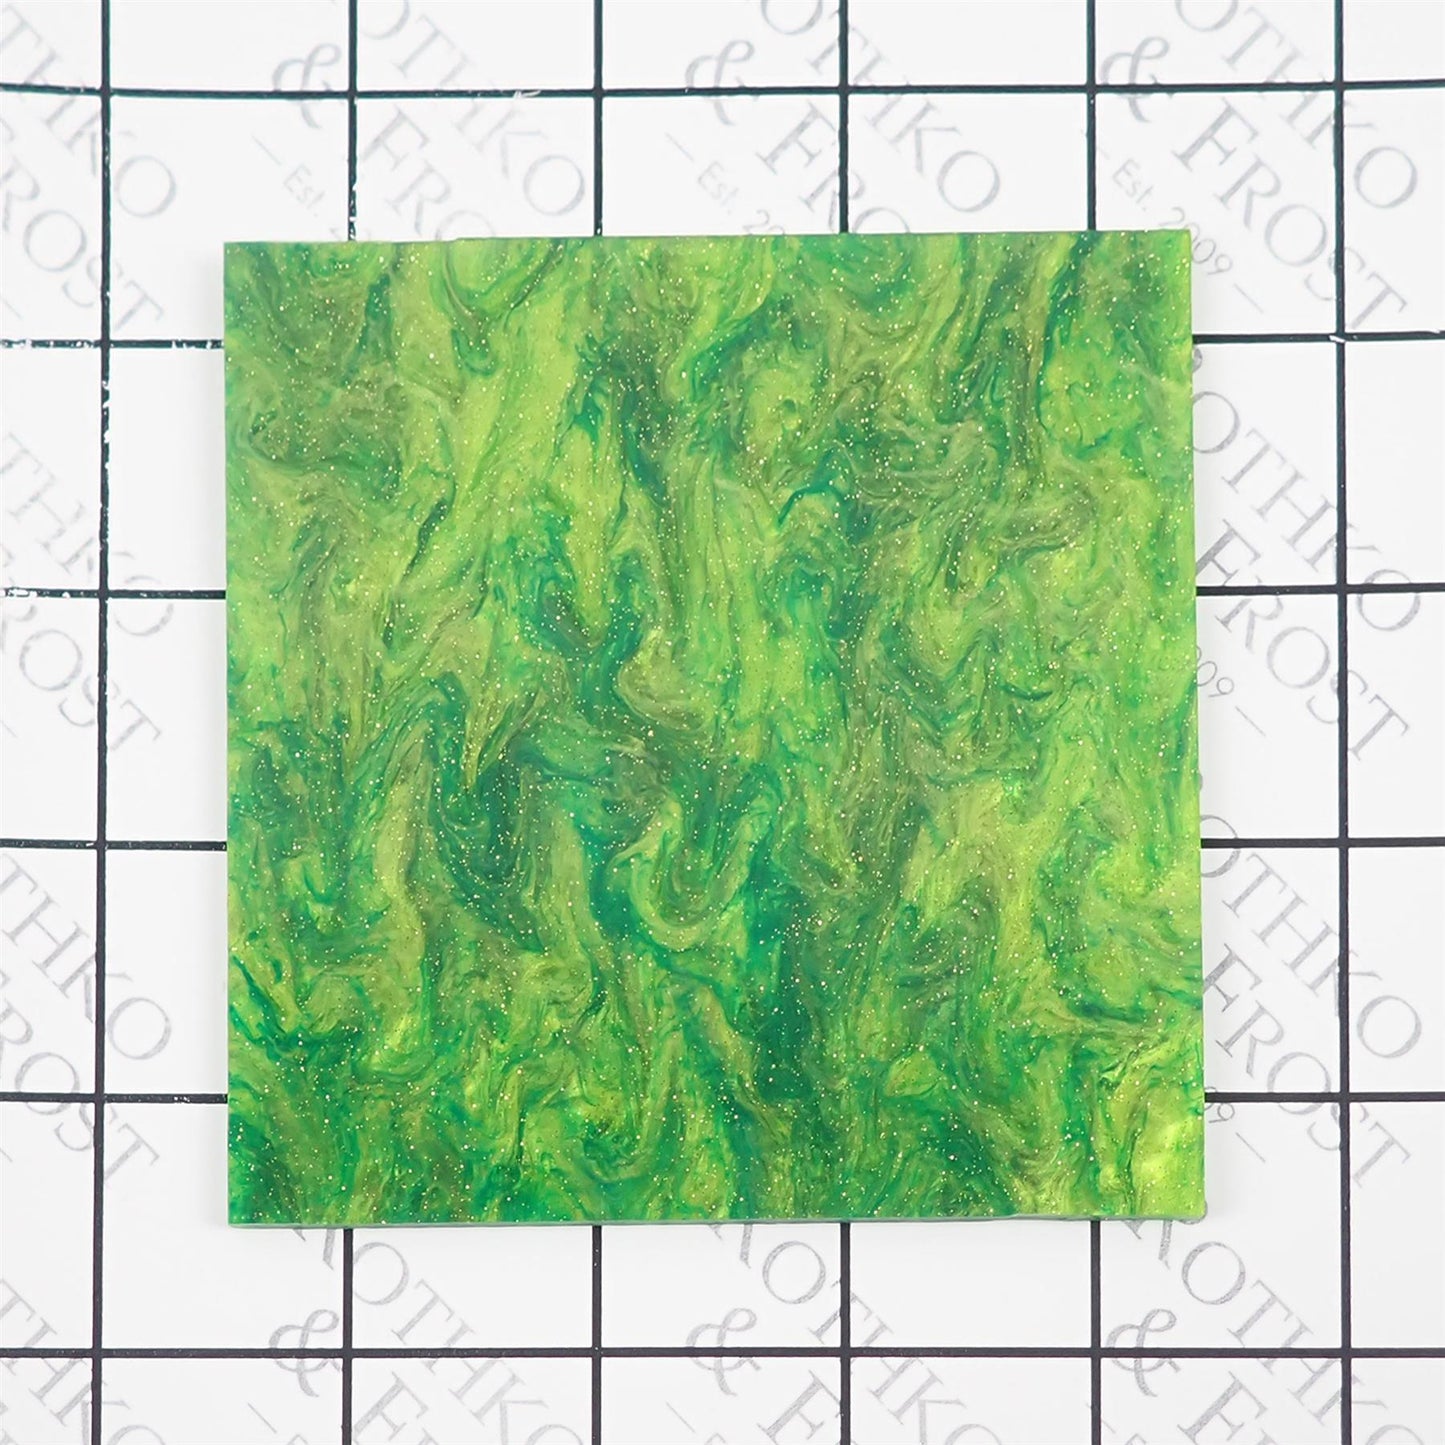 Incudo Green Glittering Smoky Acrylic Sheet - 98x98x3mm (3.9x3.86x0.12"), Sample